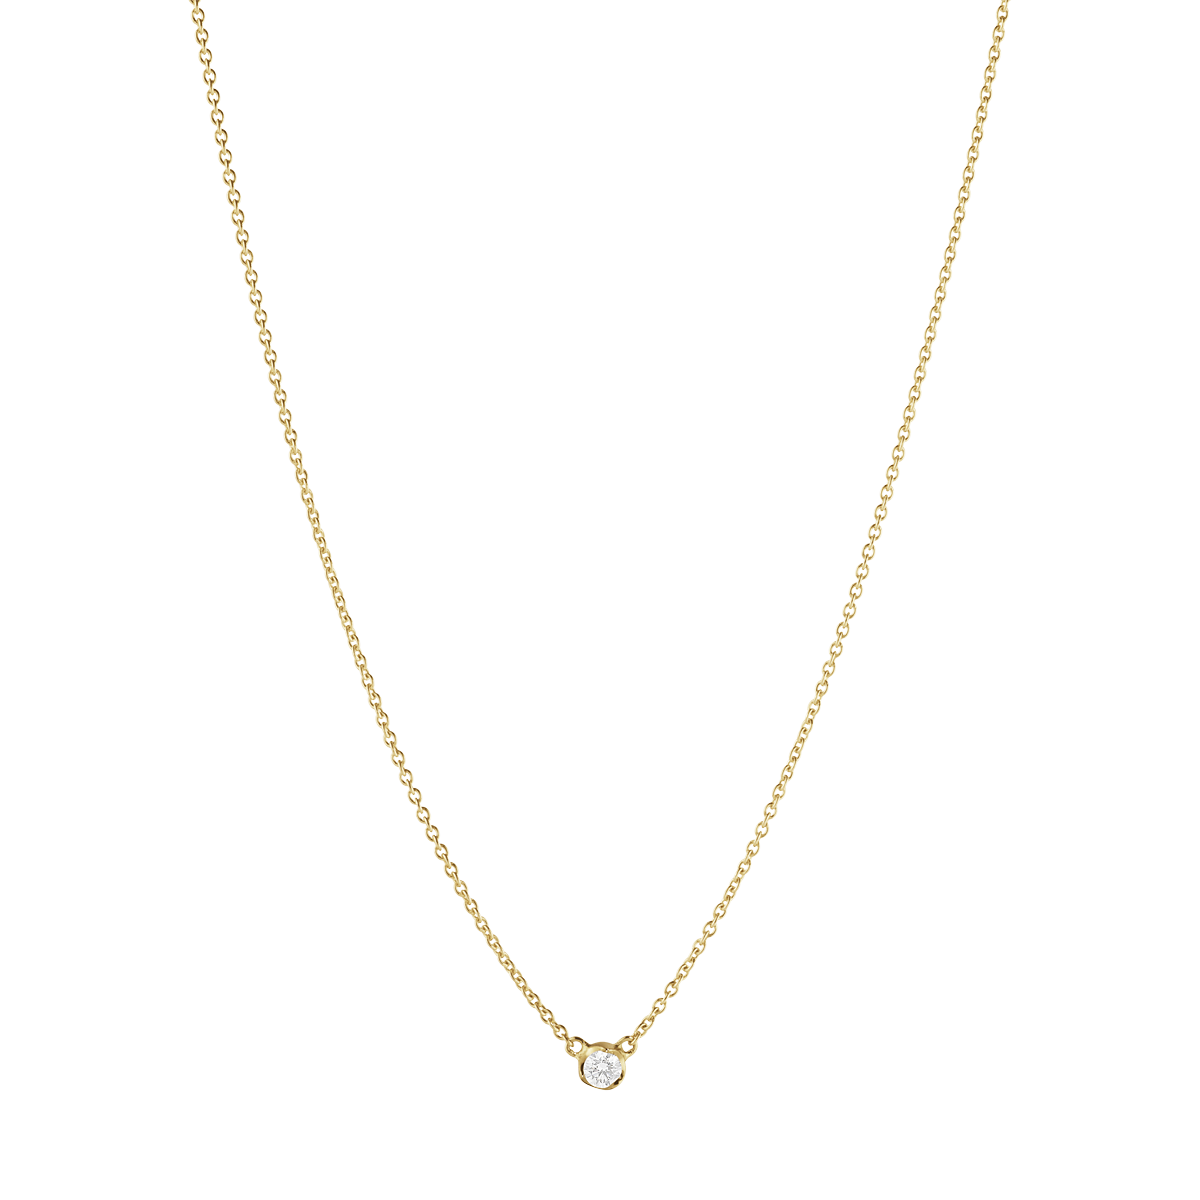 GEORG JENSEN SIGNATURE DIAMONDS, Pendant, in 18kt gold and diamonds